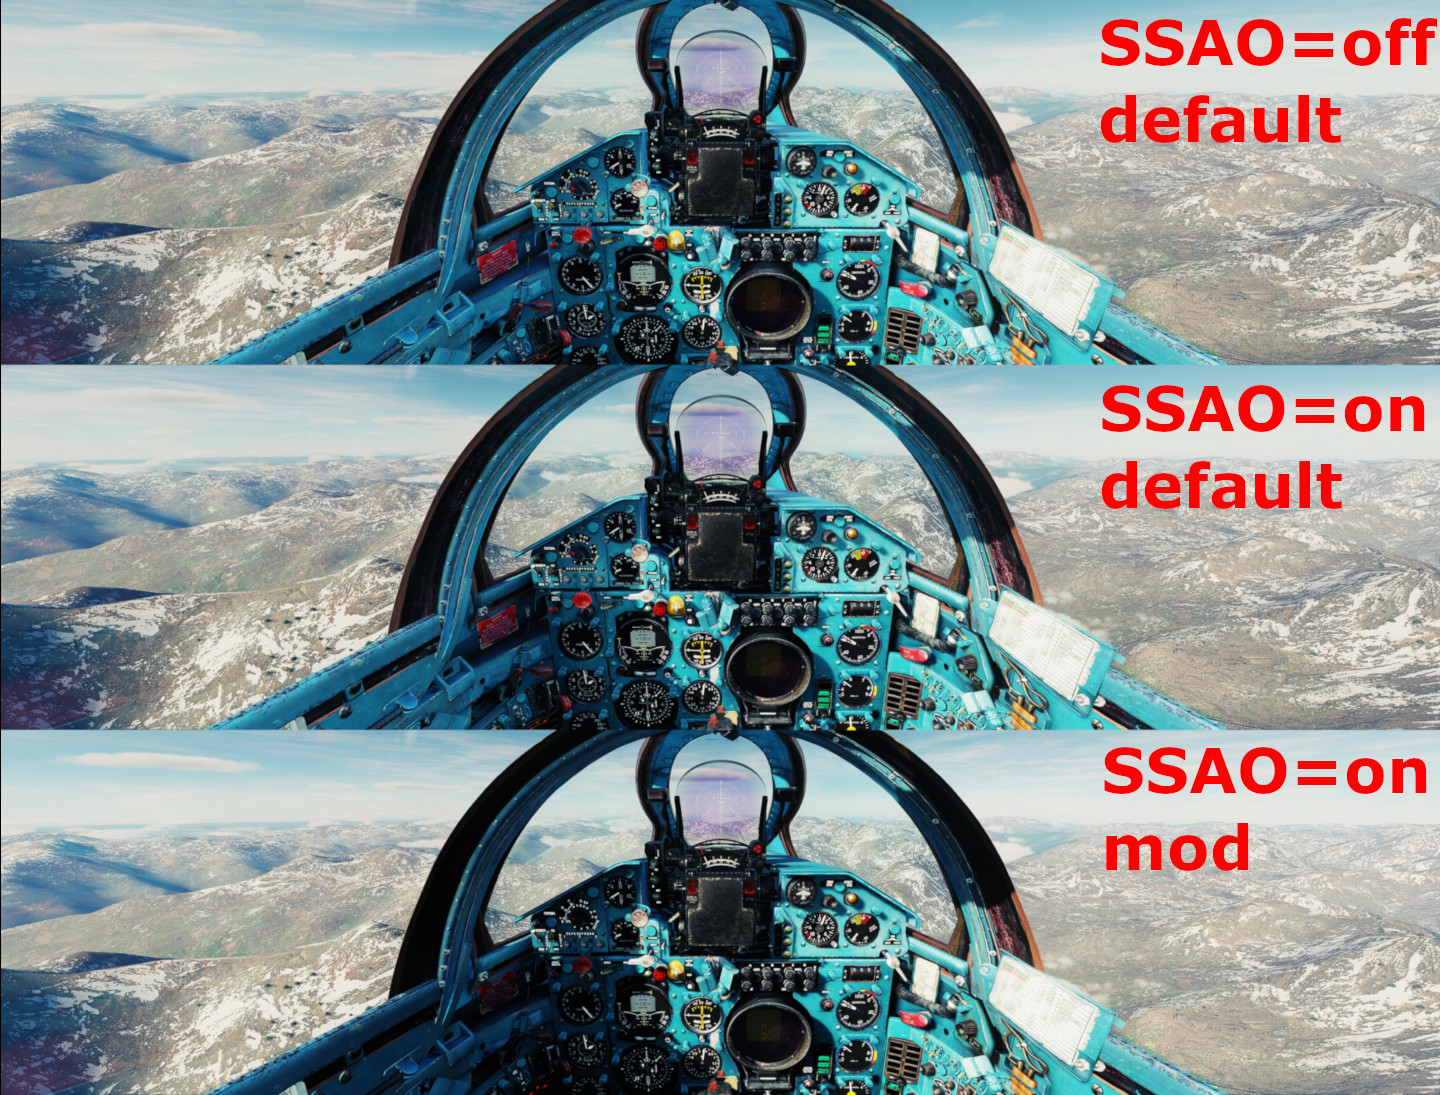 MiG-21bis / Cockpit Shadow mod